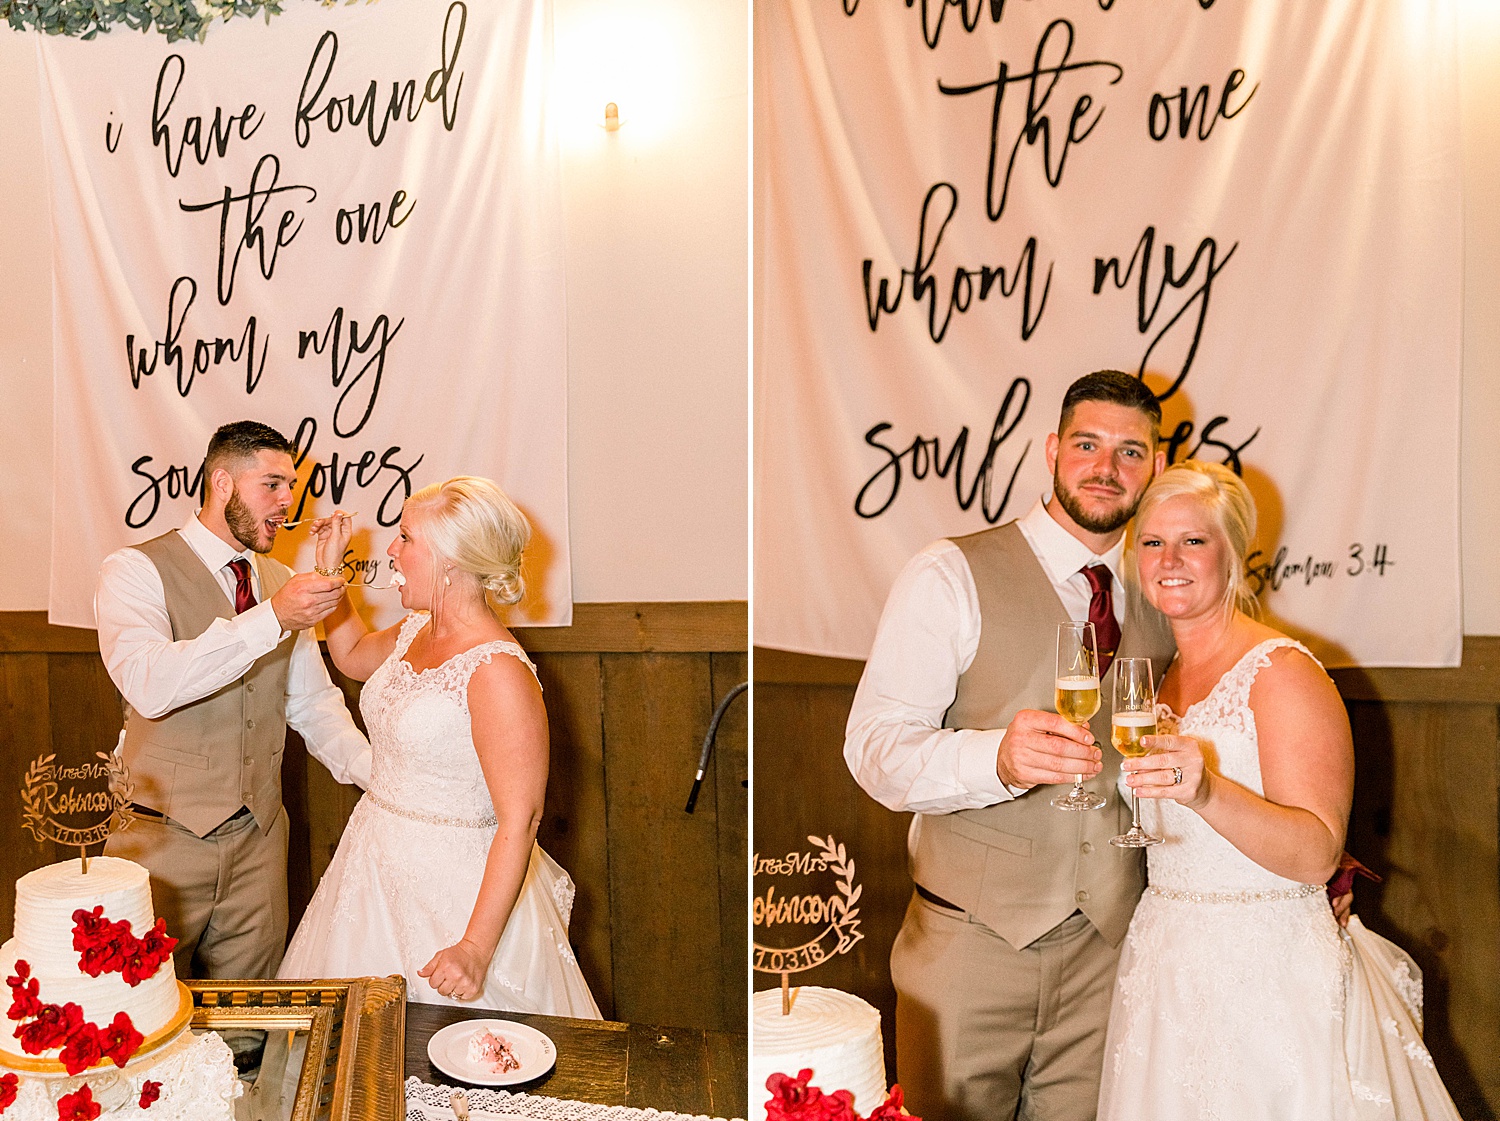 couple enjoy their wedding wedding cake and a toast